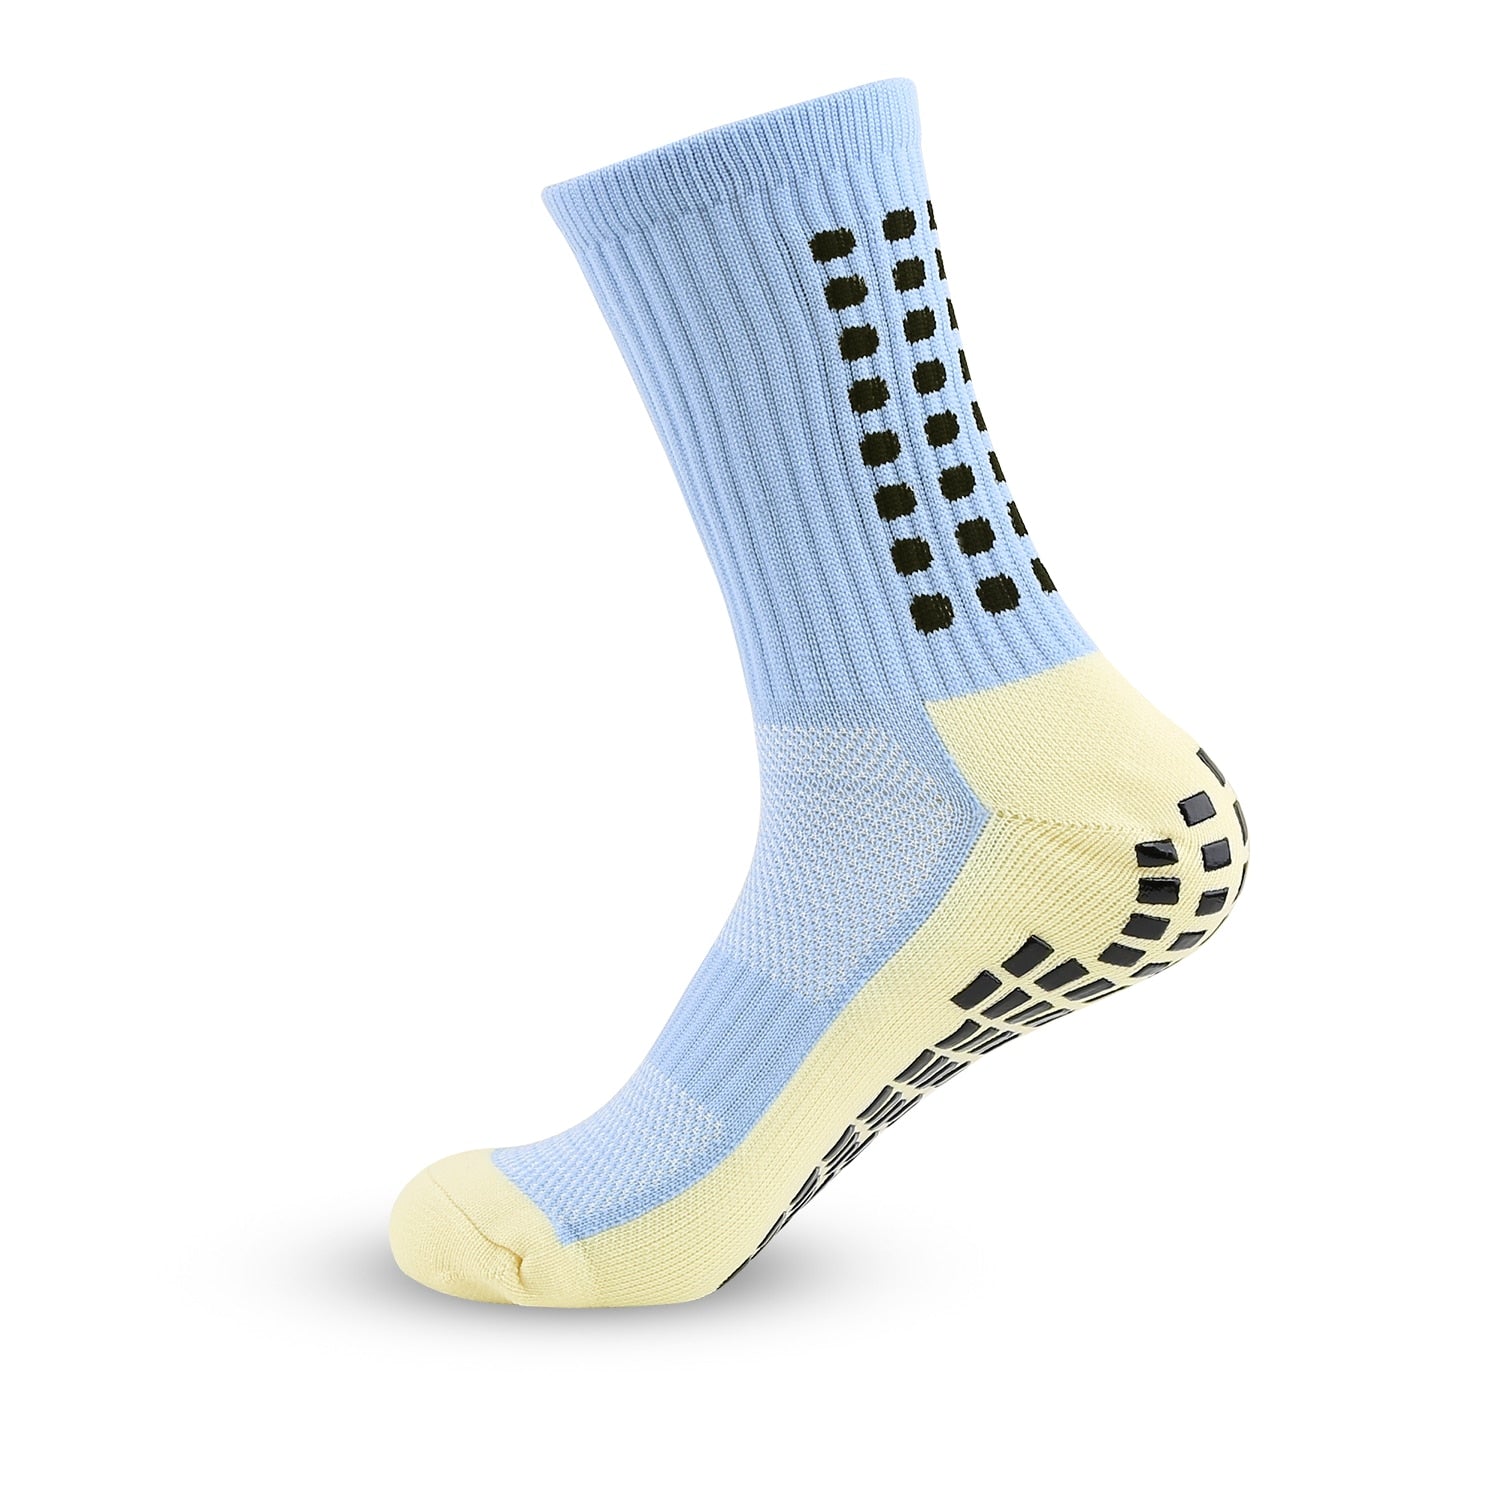 Anti-Slip Soccer Socks - Grip Football and Yoga Socks for Men and Women | Outdoor Sport Essential